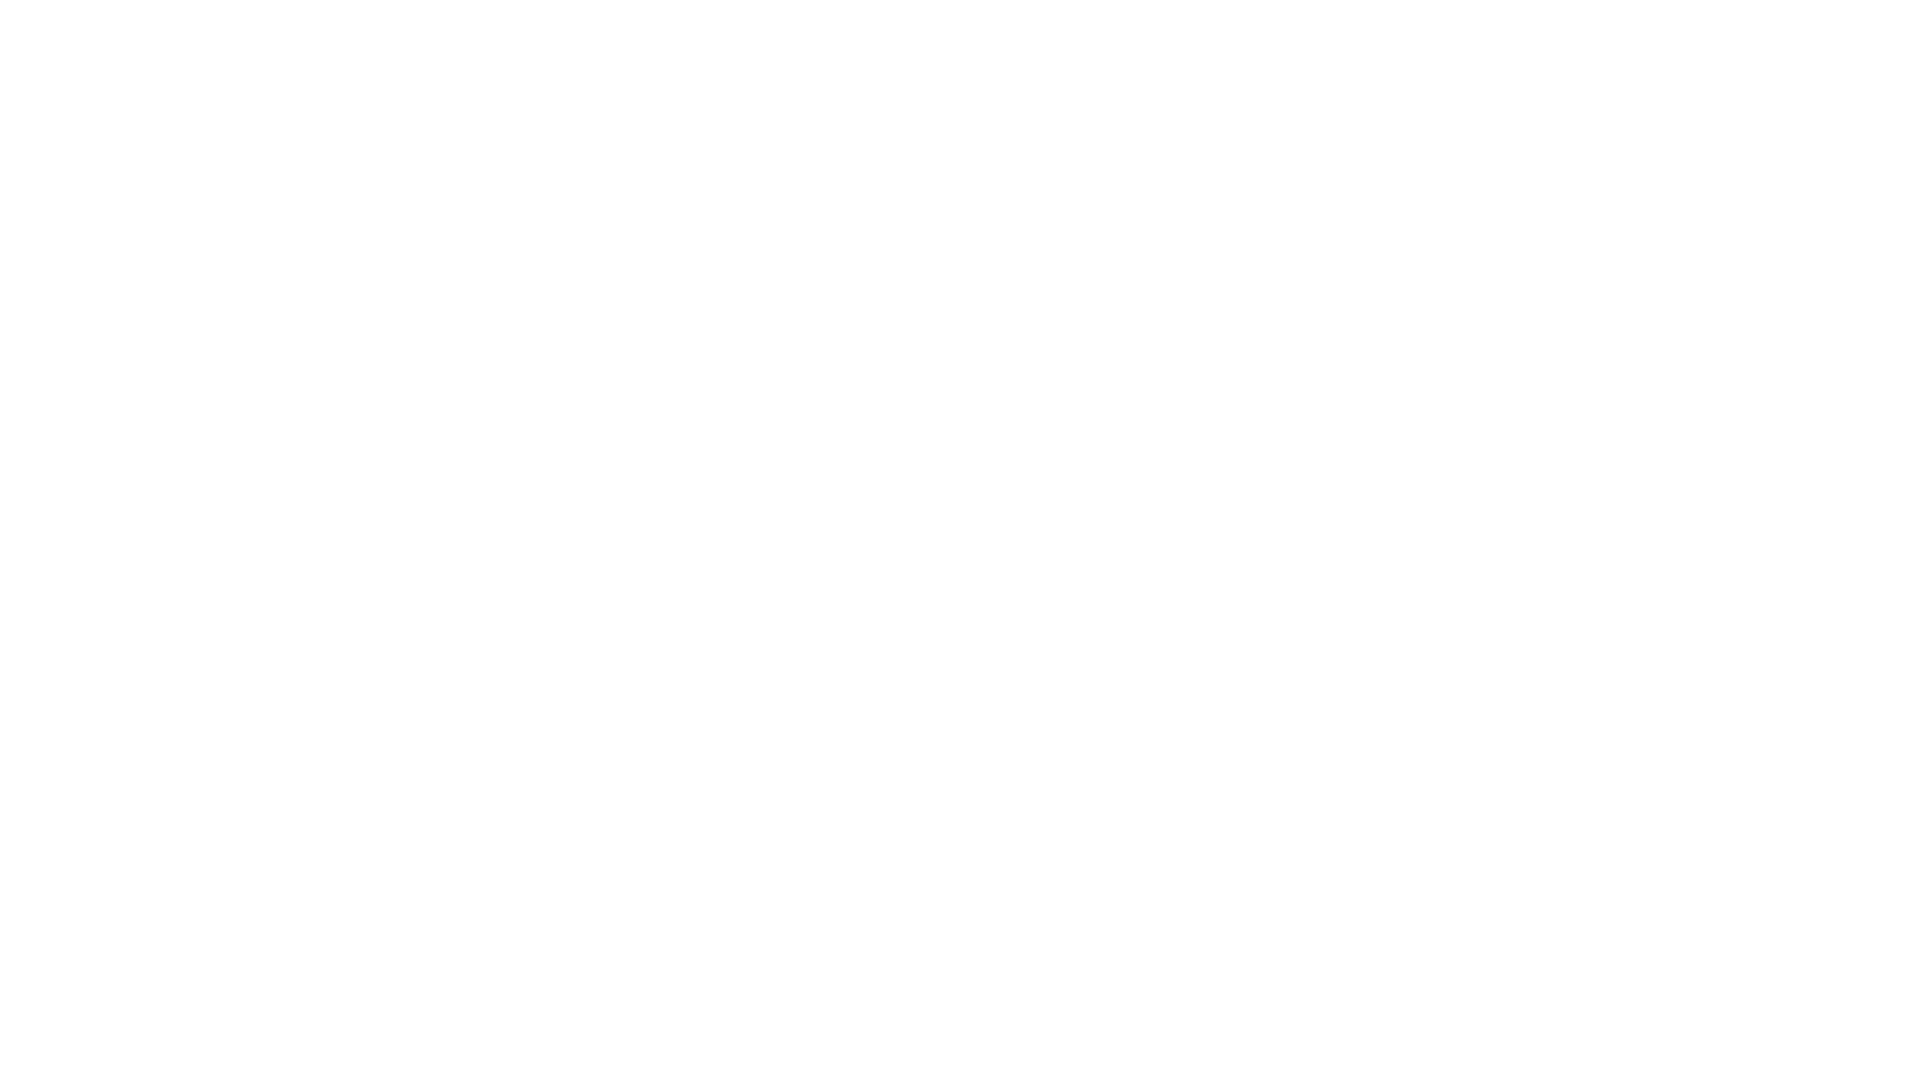 La Liga GOLAZOS